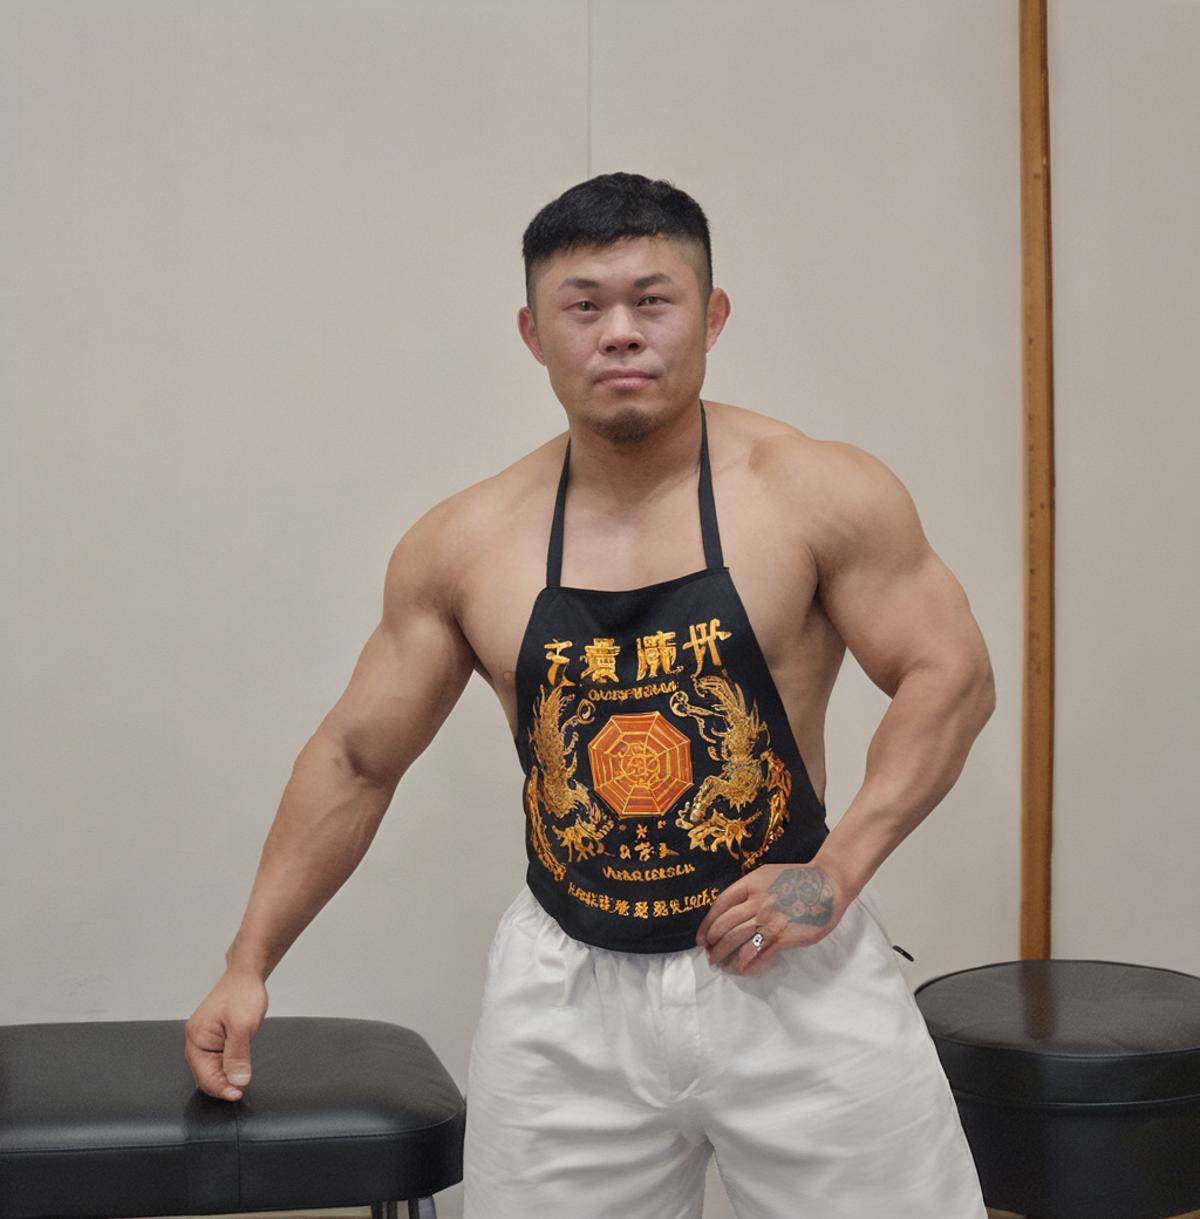 Strong Asian male athlete 02 image by allpleoleo439